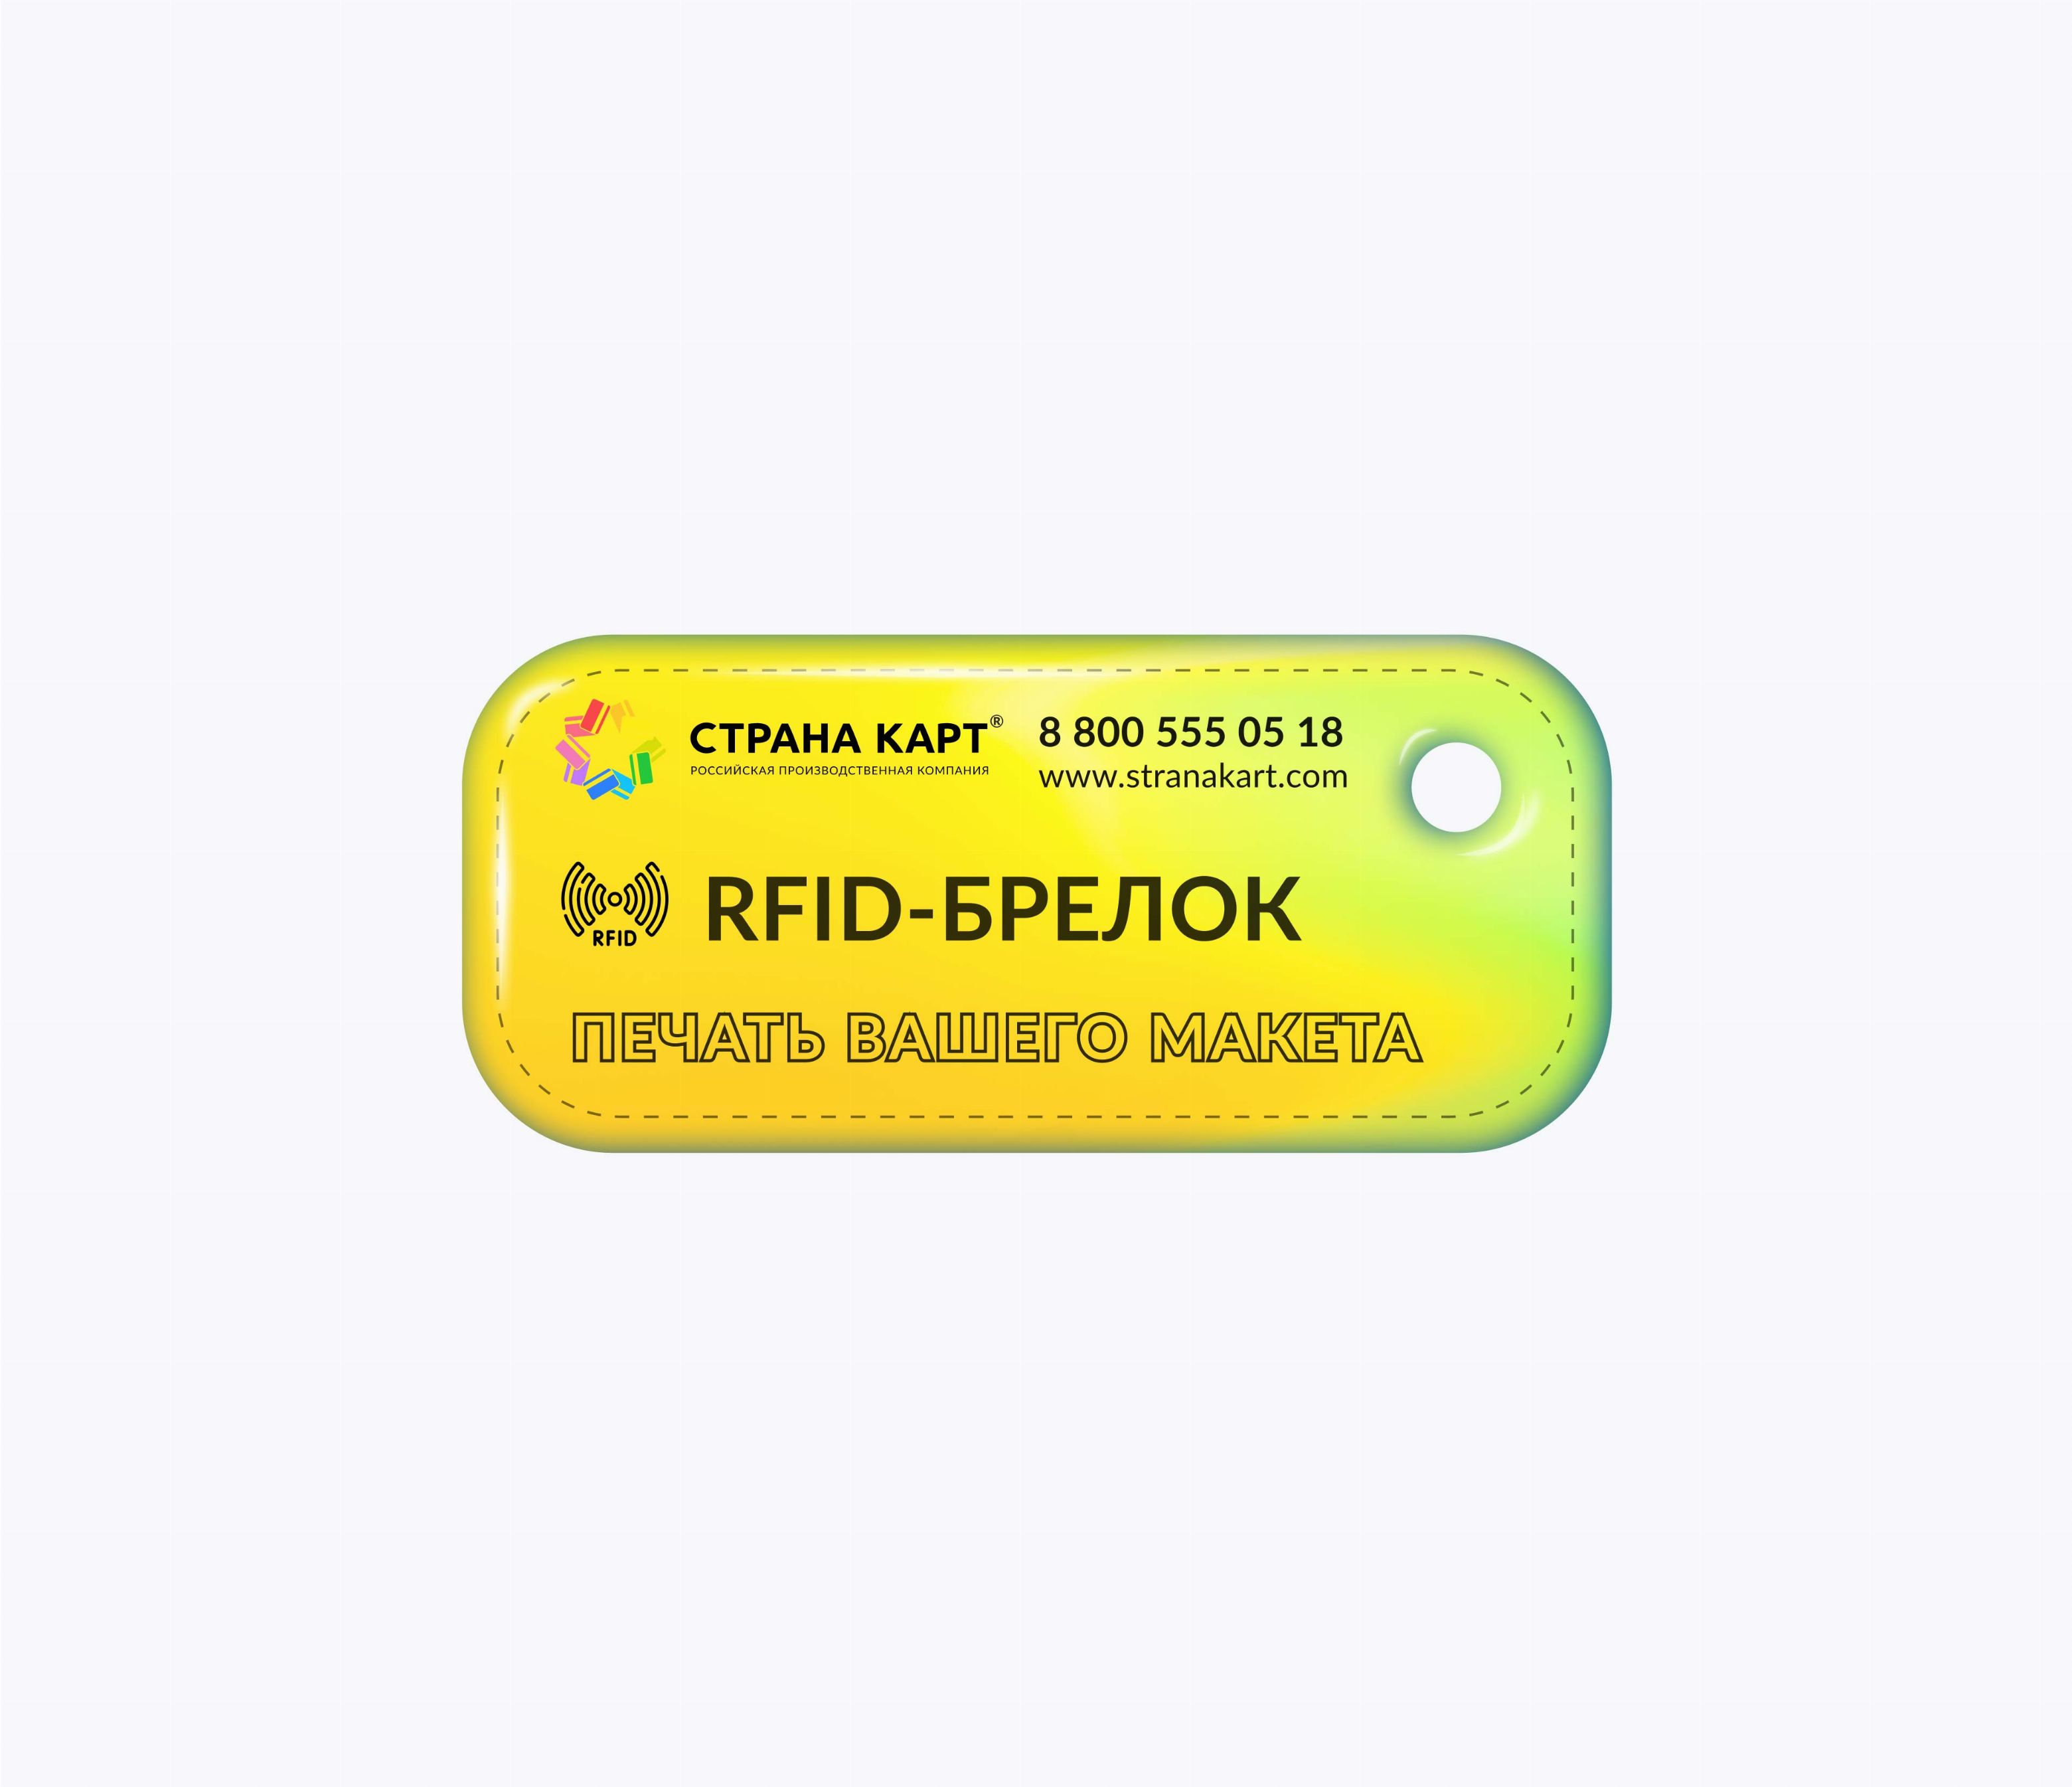 Прямоугольные мини RFID-брелоки NEOKEY® с чипом NXP MIFARE Plus X 4k 7 byte UID RFID-брелоки NEOKEY® с чипом NXP MIFARE Plus X 4k 7 byte UID и вашим логотипом